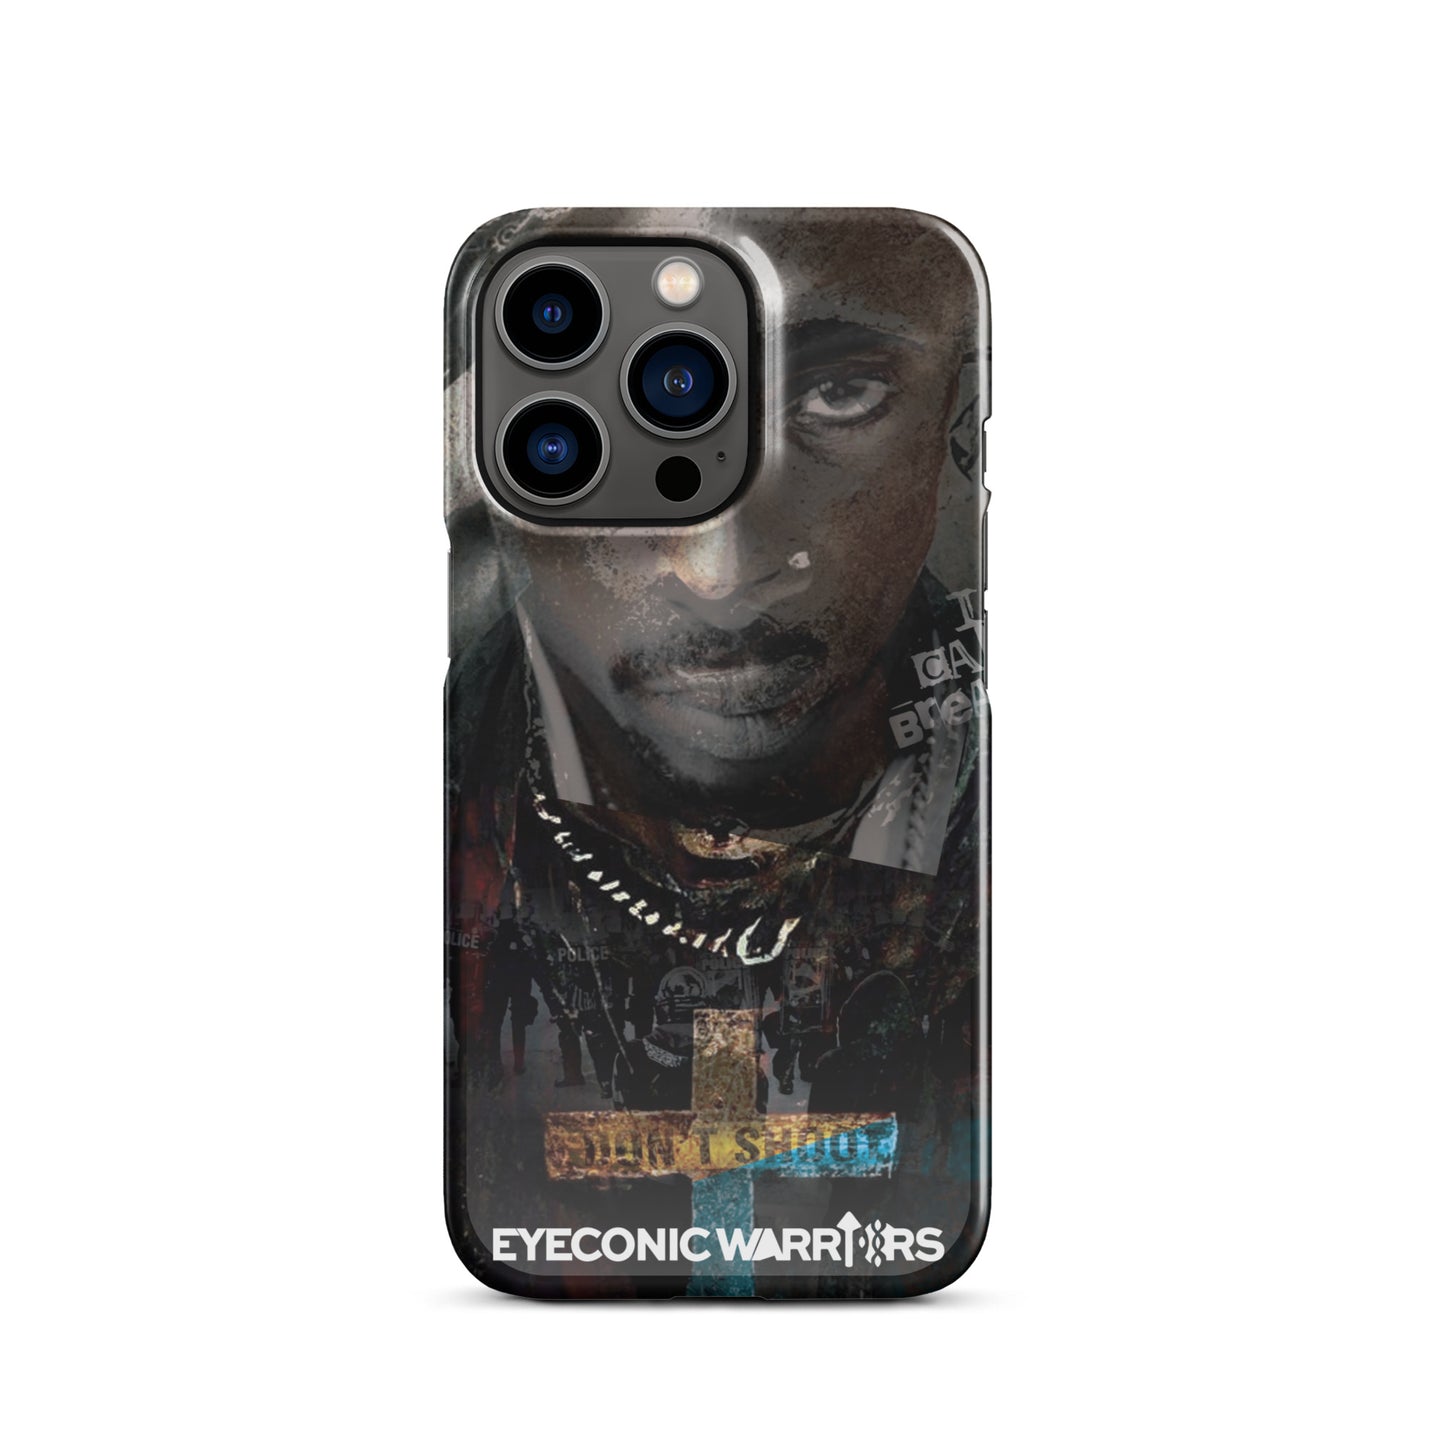 Tupac Shakur Legacy Custom iPhone Case - Art for Change